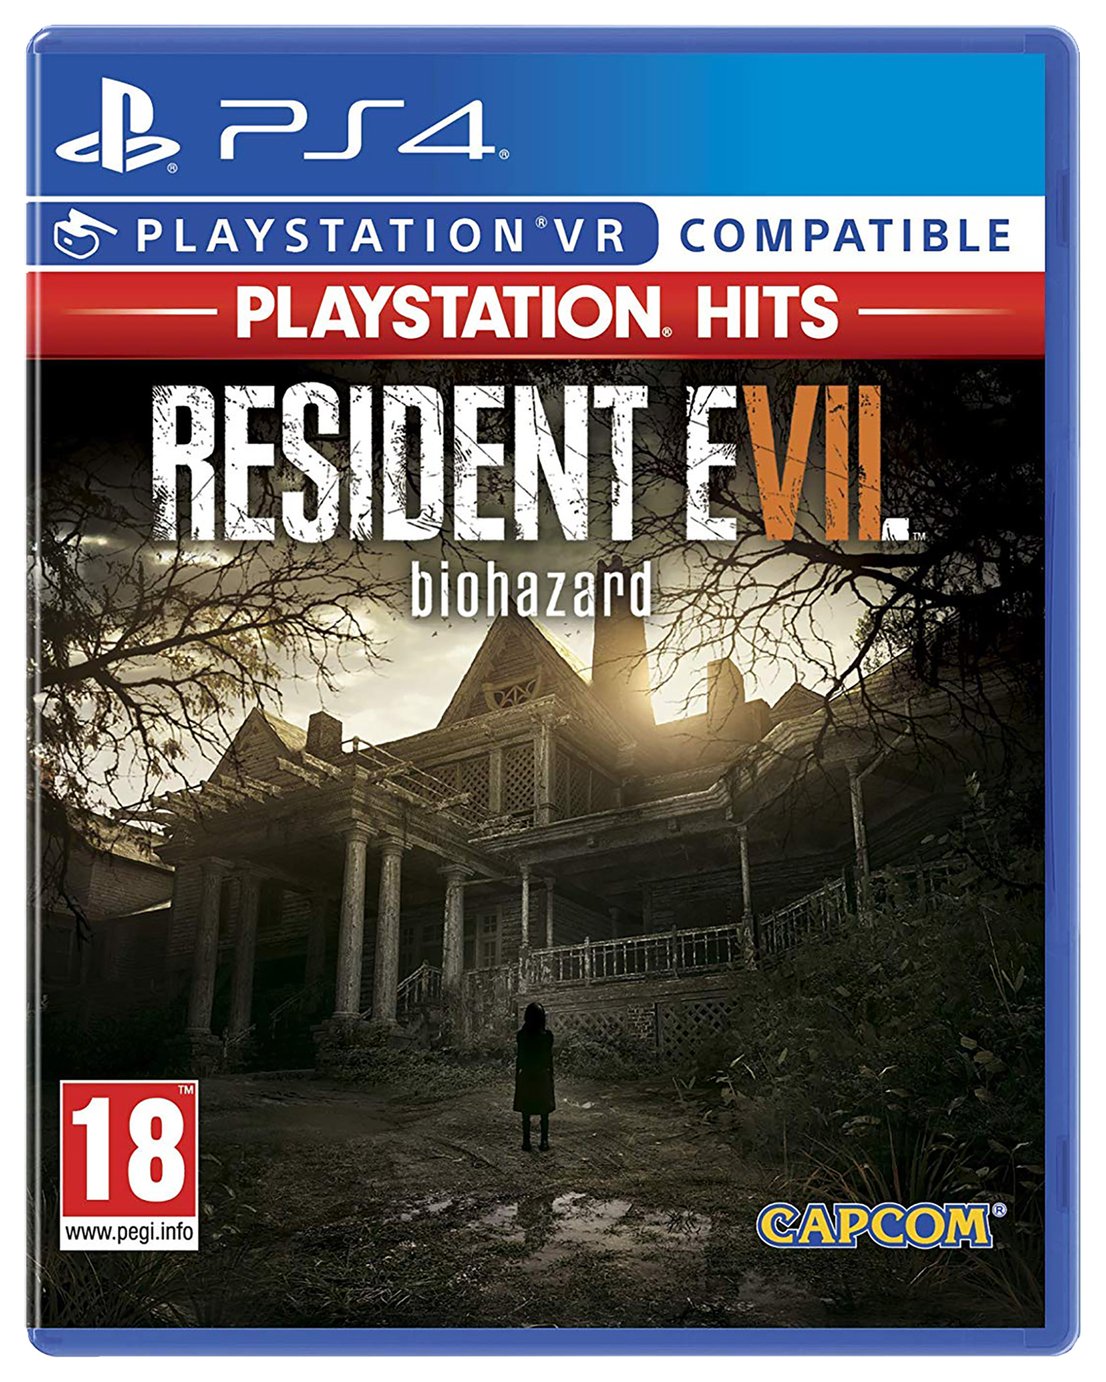 Resident Evil 7 Biohazard PS4 Game